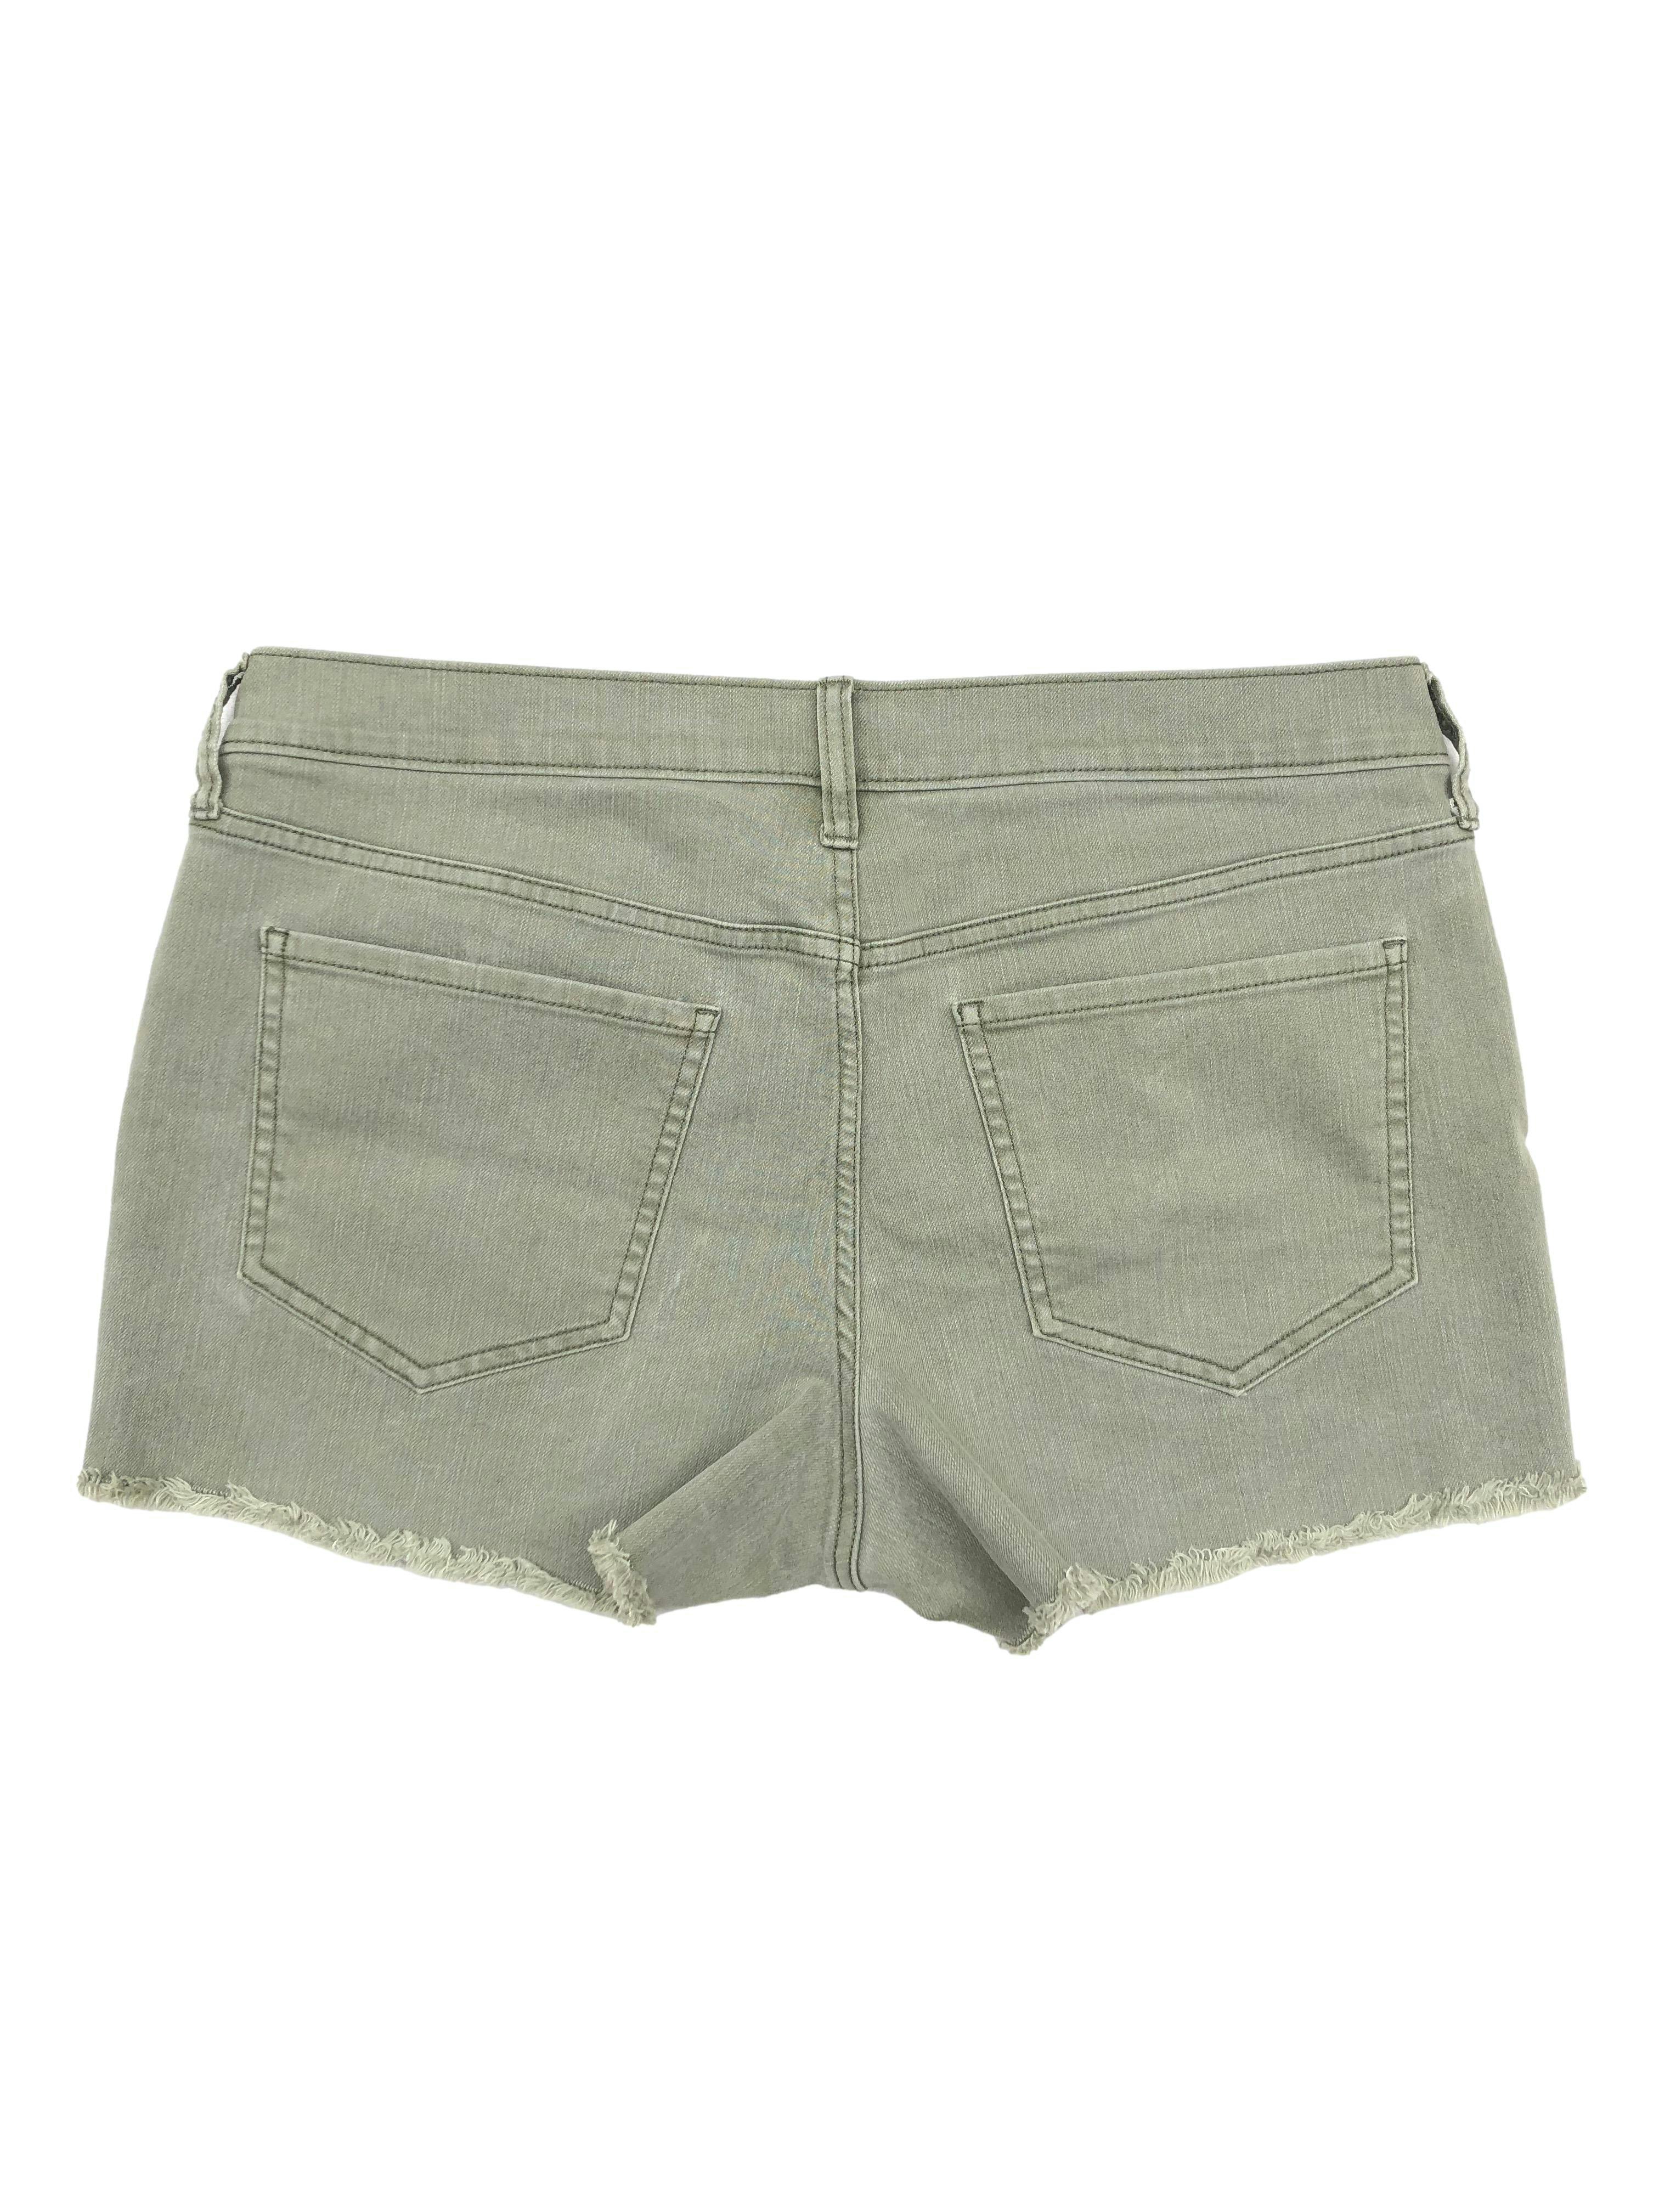 Short jean verde agua con bolsillos y baste desflecada. Cintura 90cm Tiro 25cm Largo 32cm